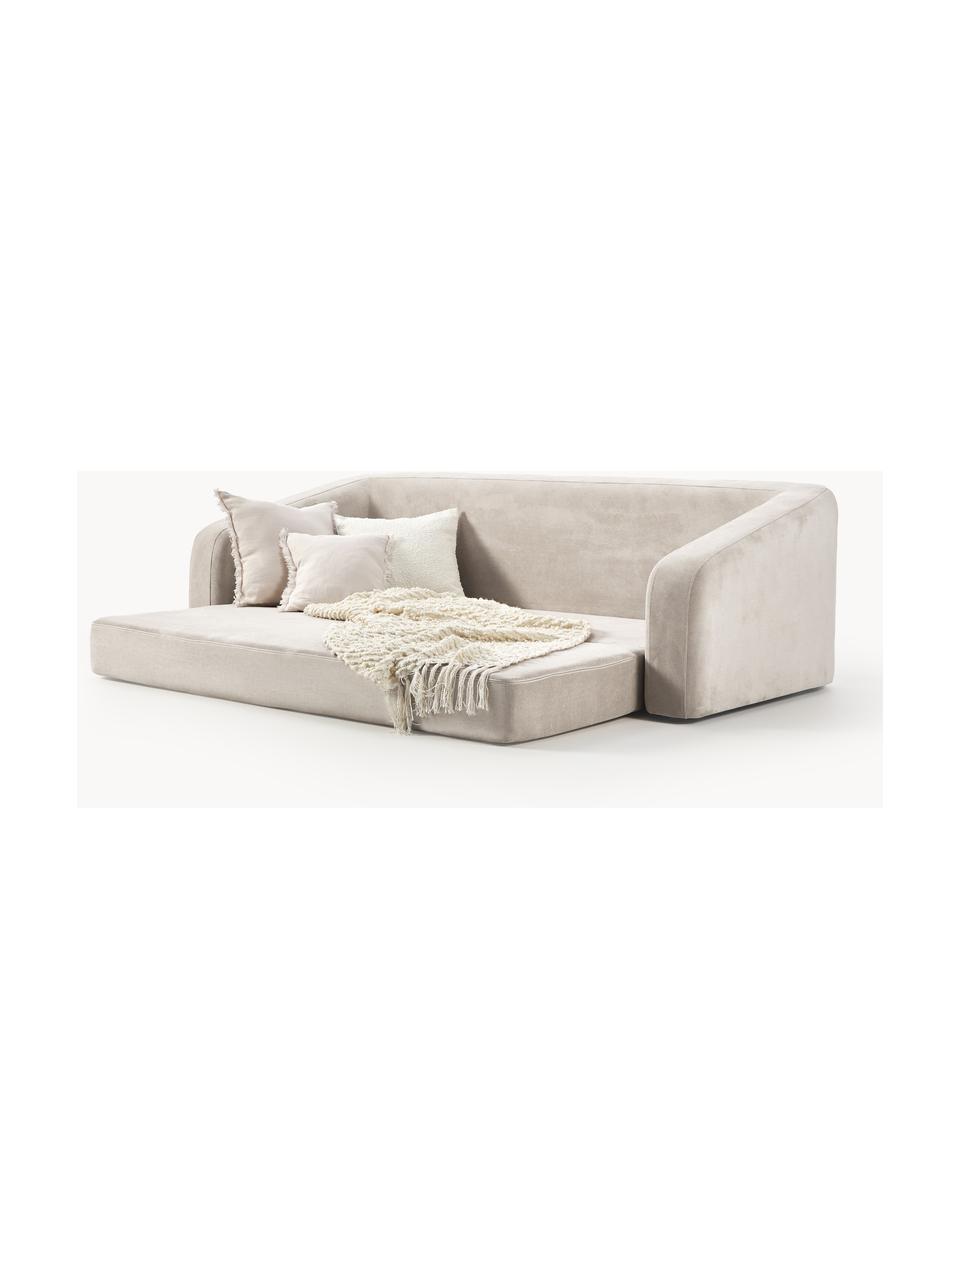 Sofá cama Eliot (3 plazas), Tapizado: 88% poliéster, 12% nylon , Patas: plástico, Tejido blanco crema, An 230 x Al 100 cm